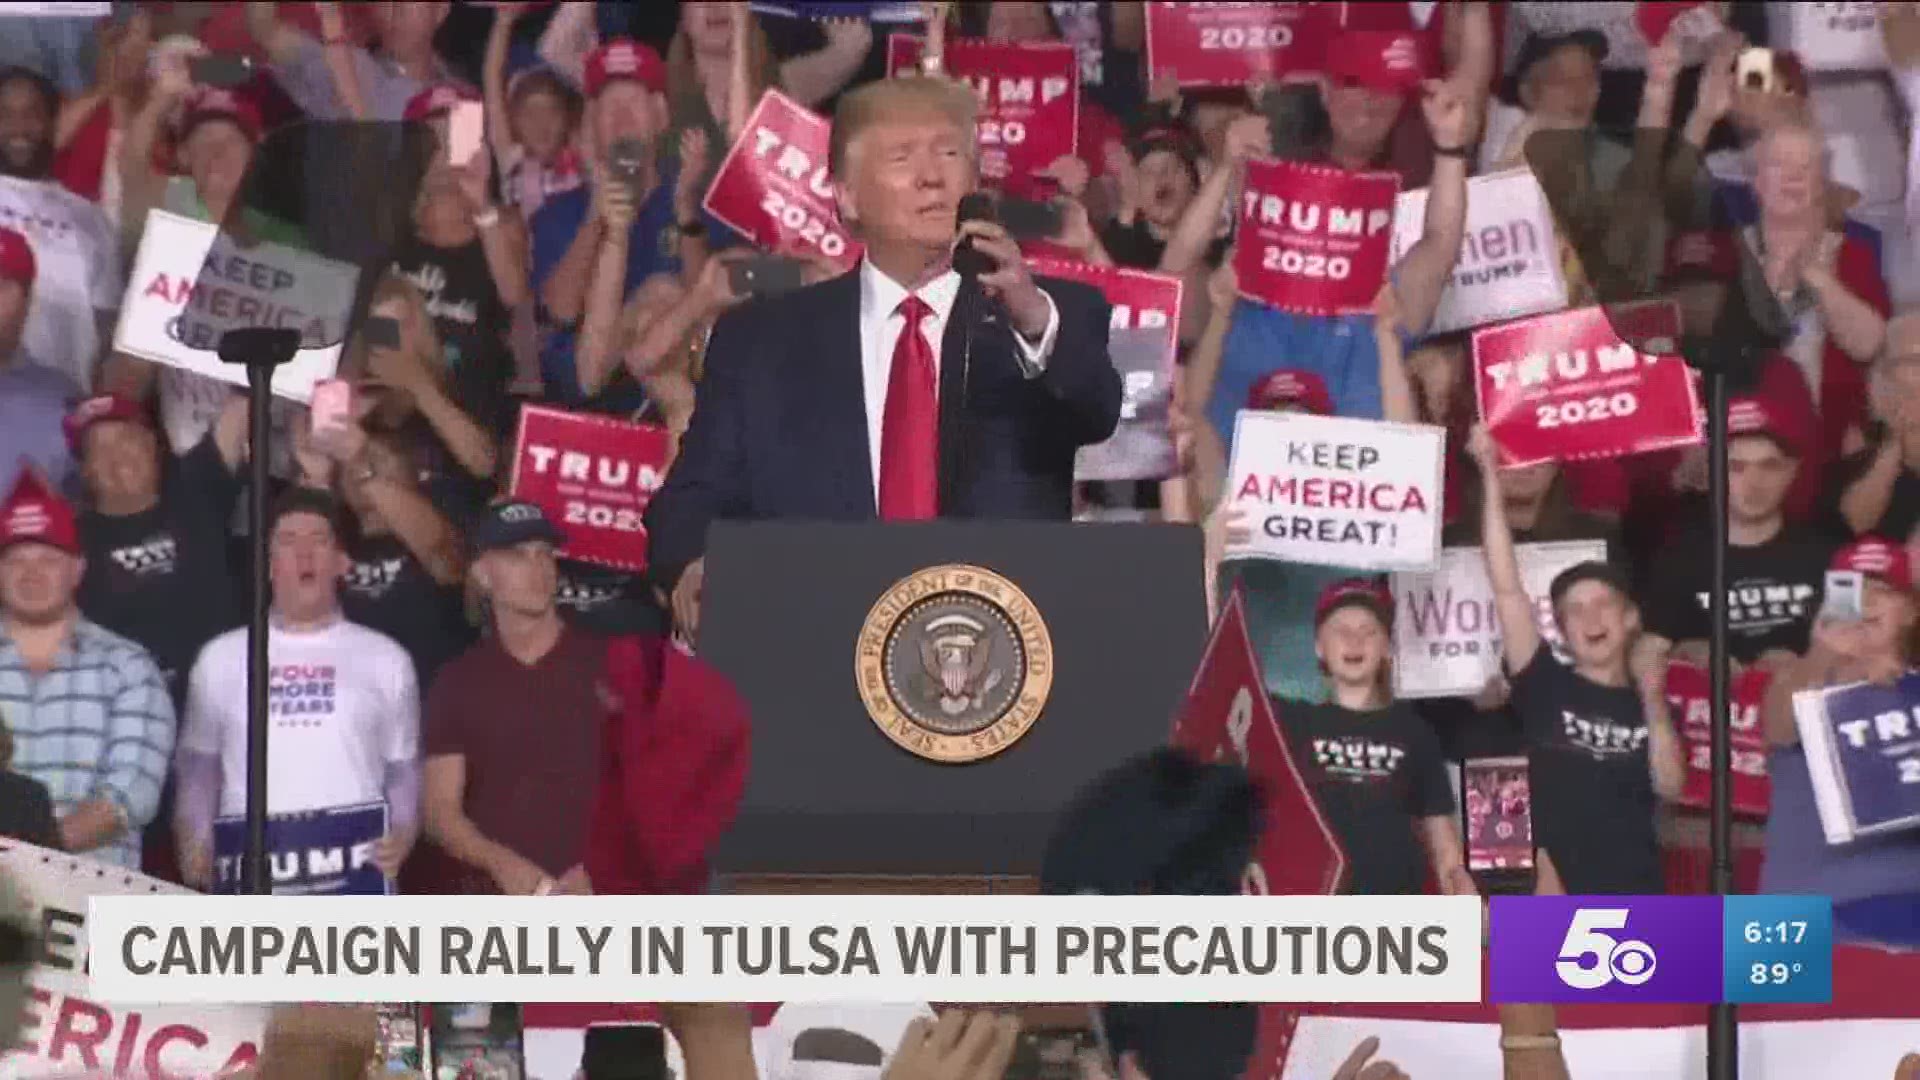 President Trump campaign rally in Tulsa still scheduled with COVID-19 precautions